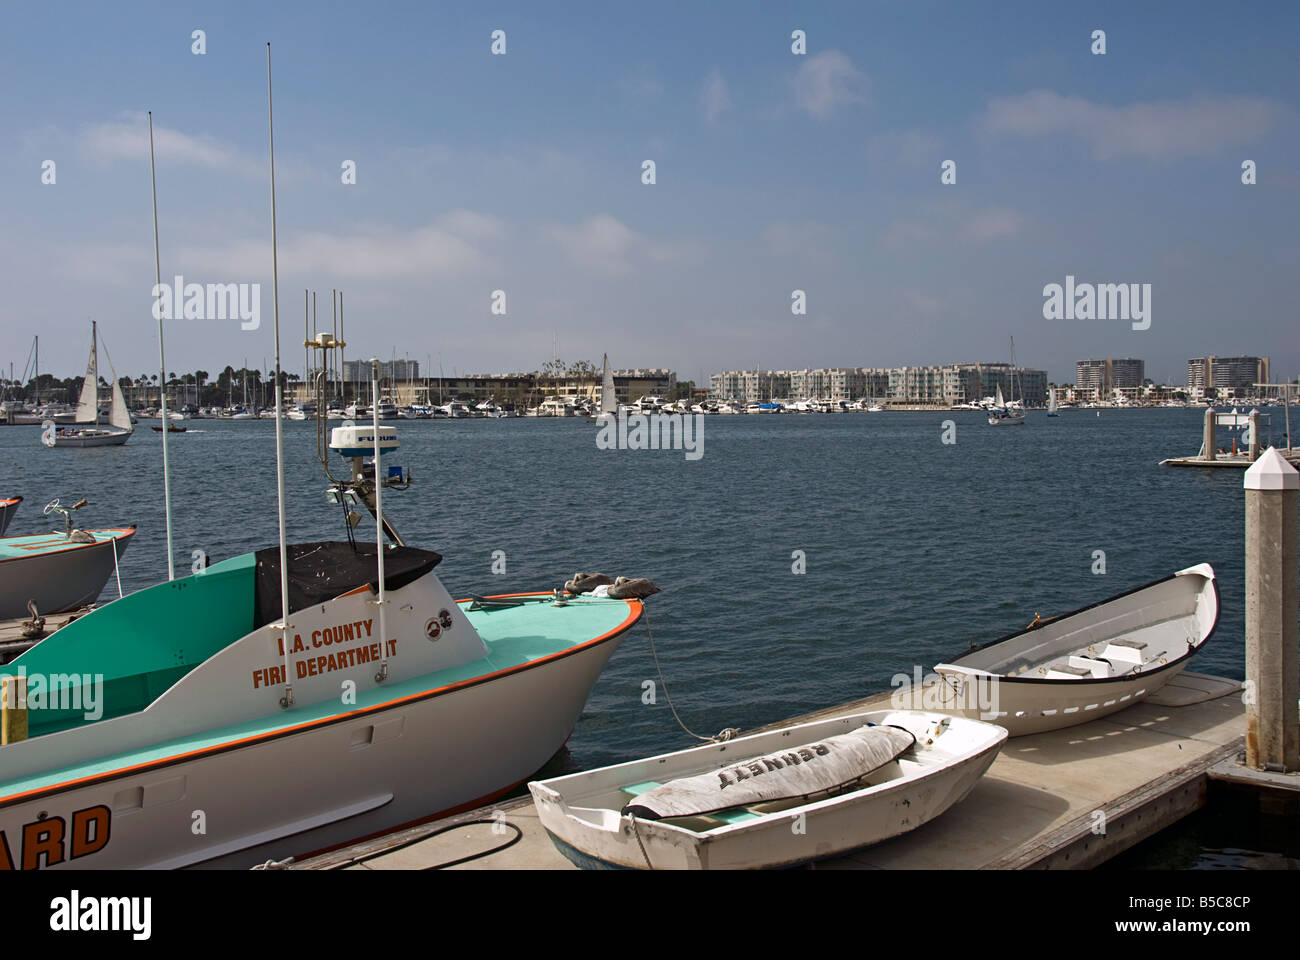 Marina, del, Rey CA main channel Sailboat motorboat yachts Fisherman's Village Los Angeles County California boat harbor Stock Photo